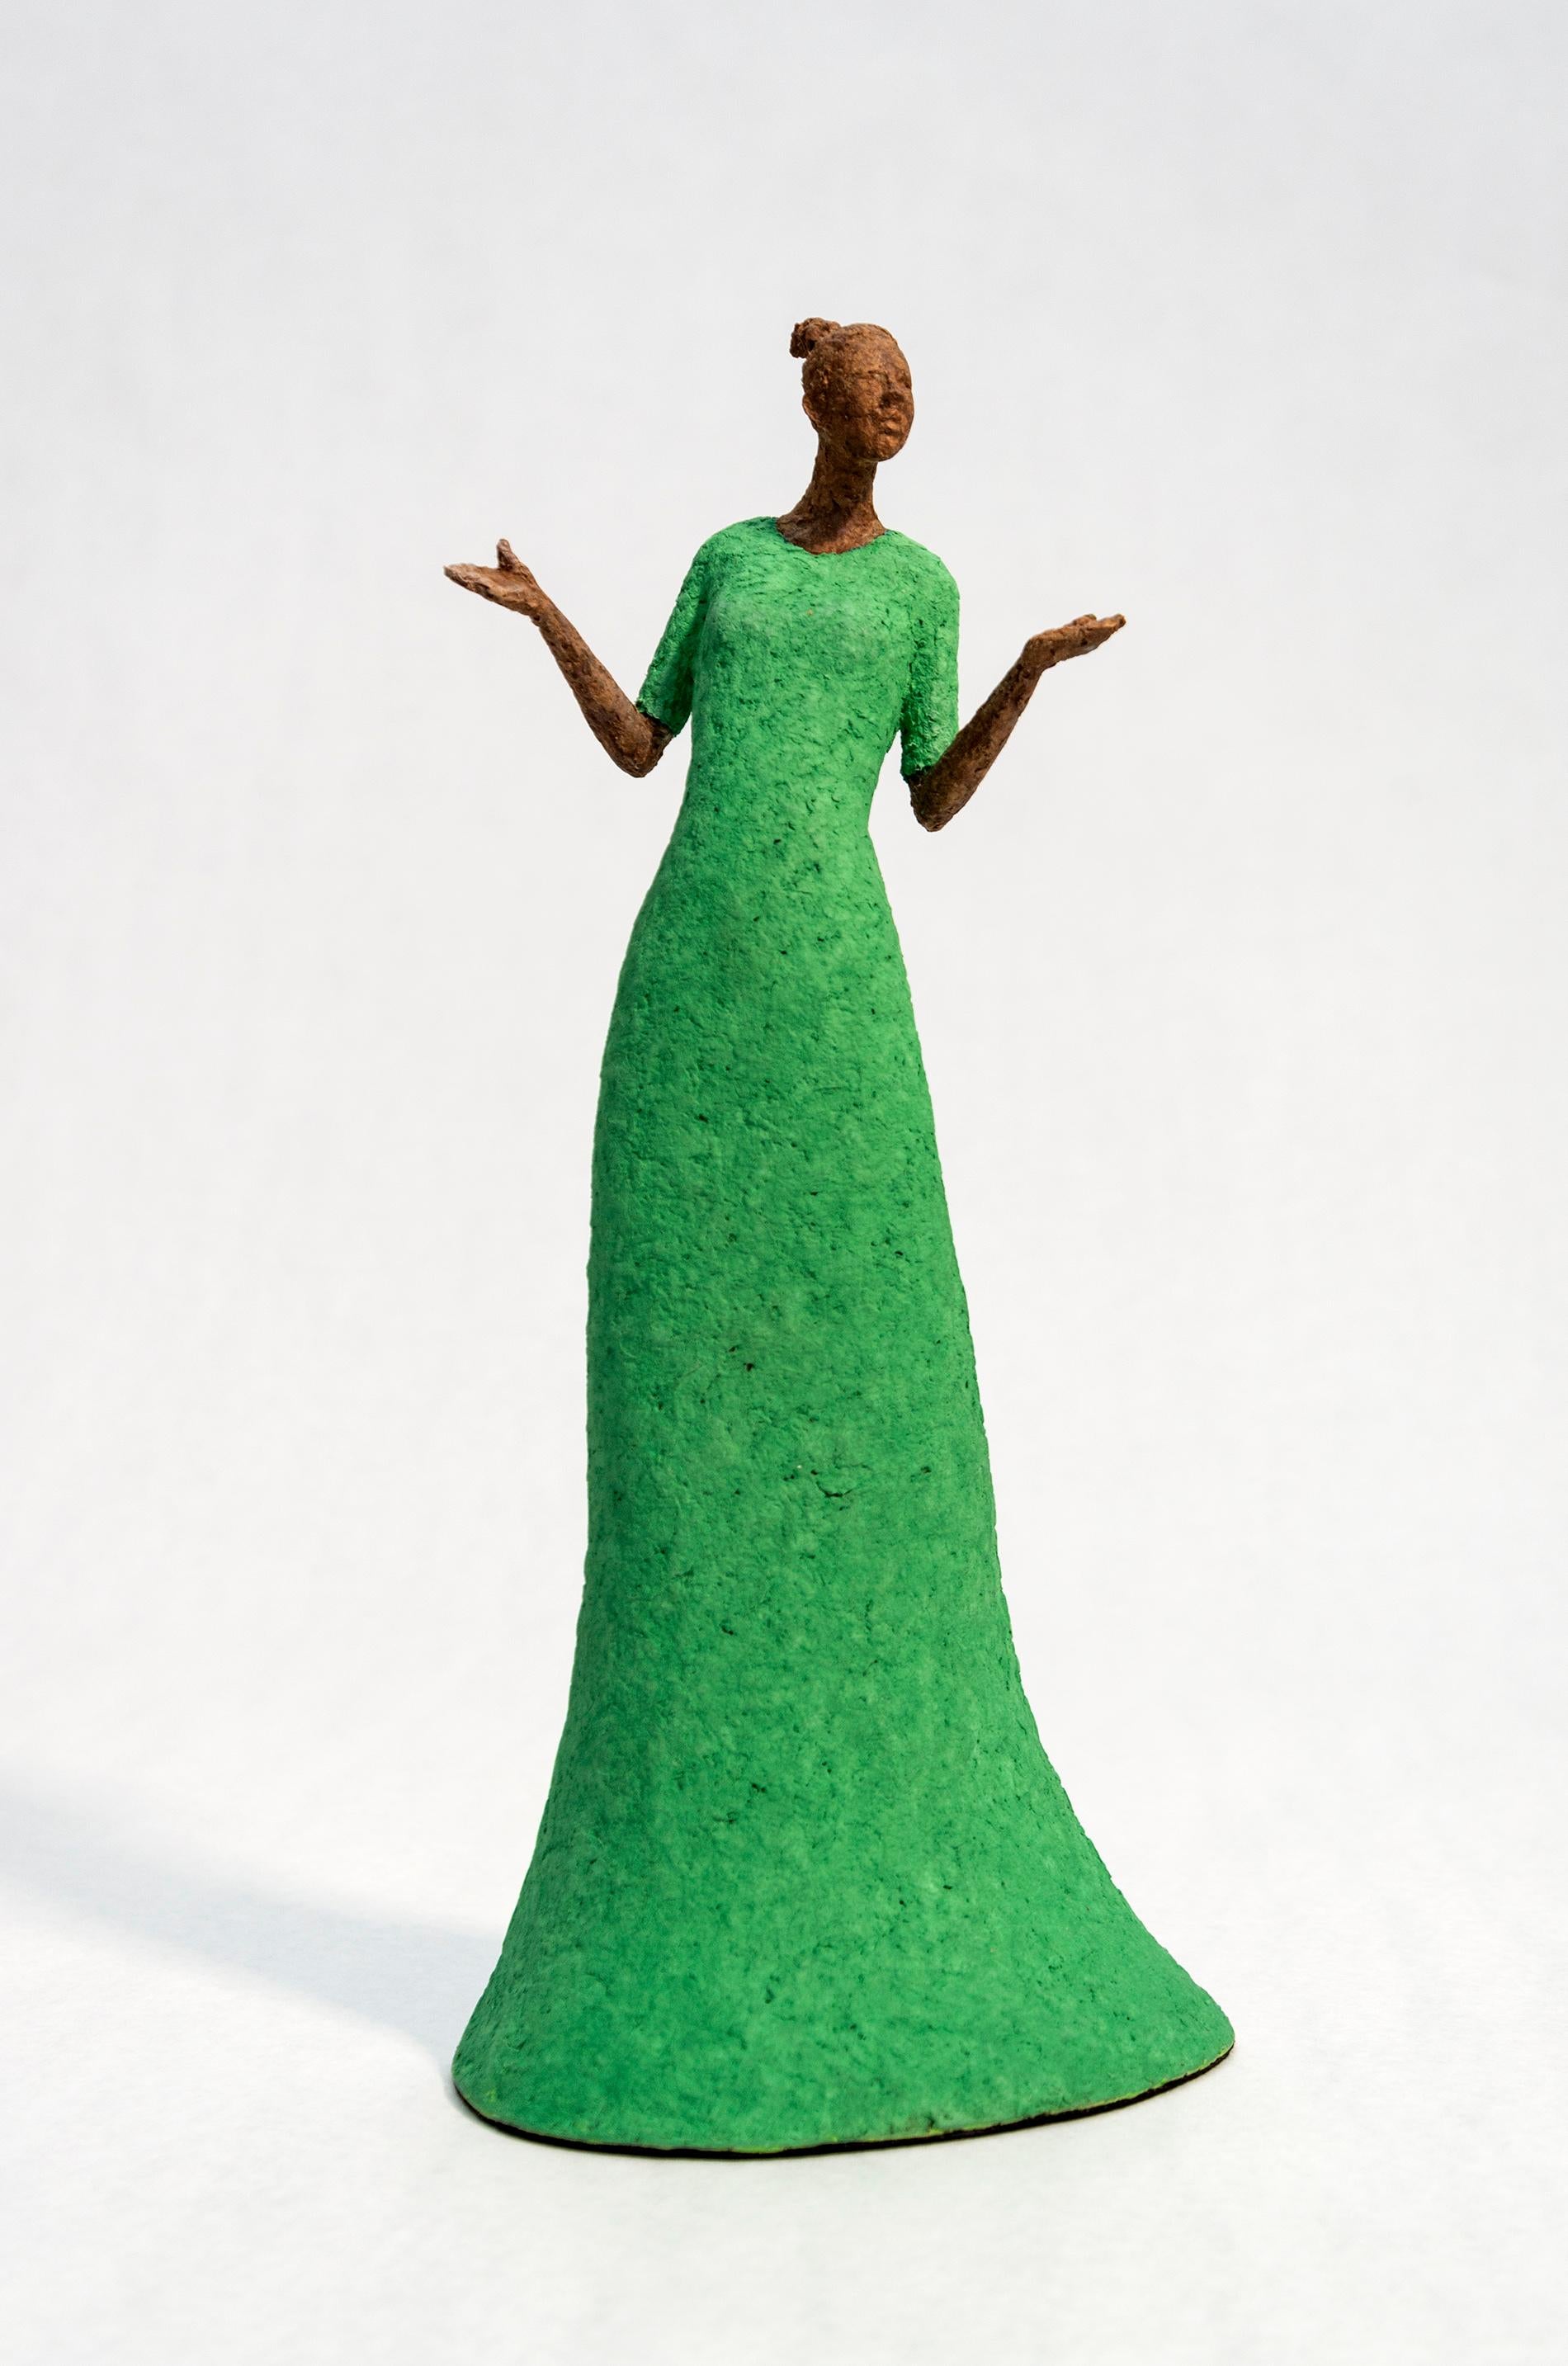 Paul Duval Figurative Sculpture – Bella - leuchtend, ausdrucksstark, strukturiert, weiblich, figurativ, Papiermaché-Skulptur